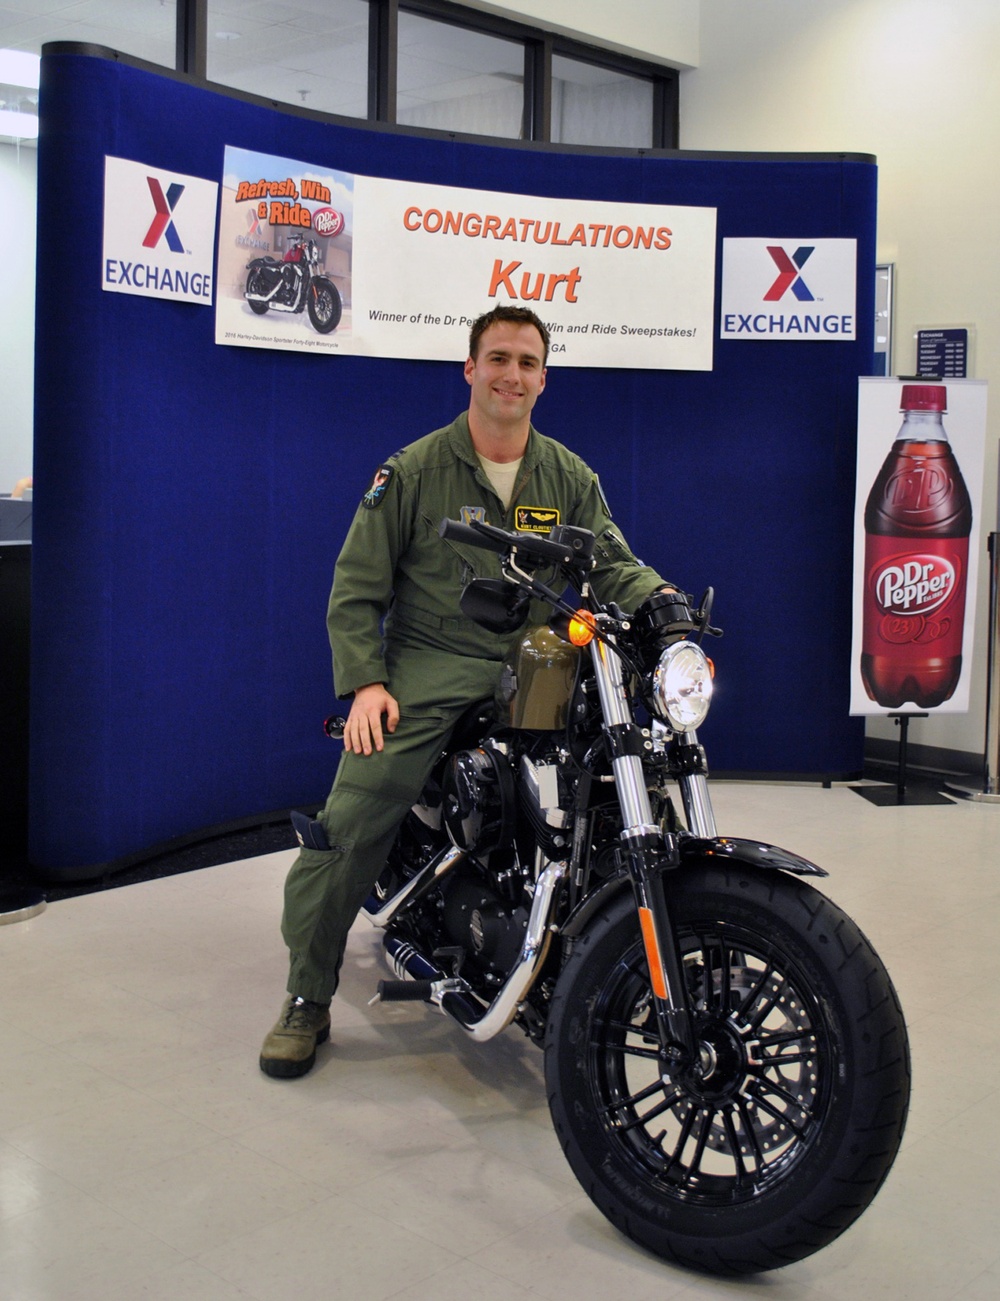 Fighter Pilot Wins Harley-Davidson Motorcycle at Moody Exchange